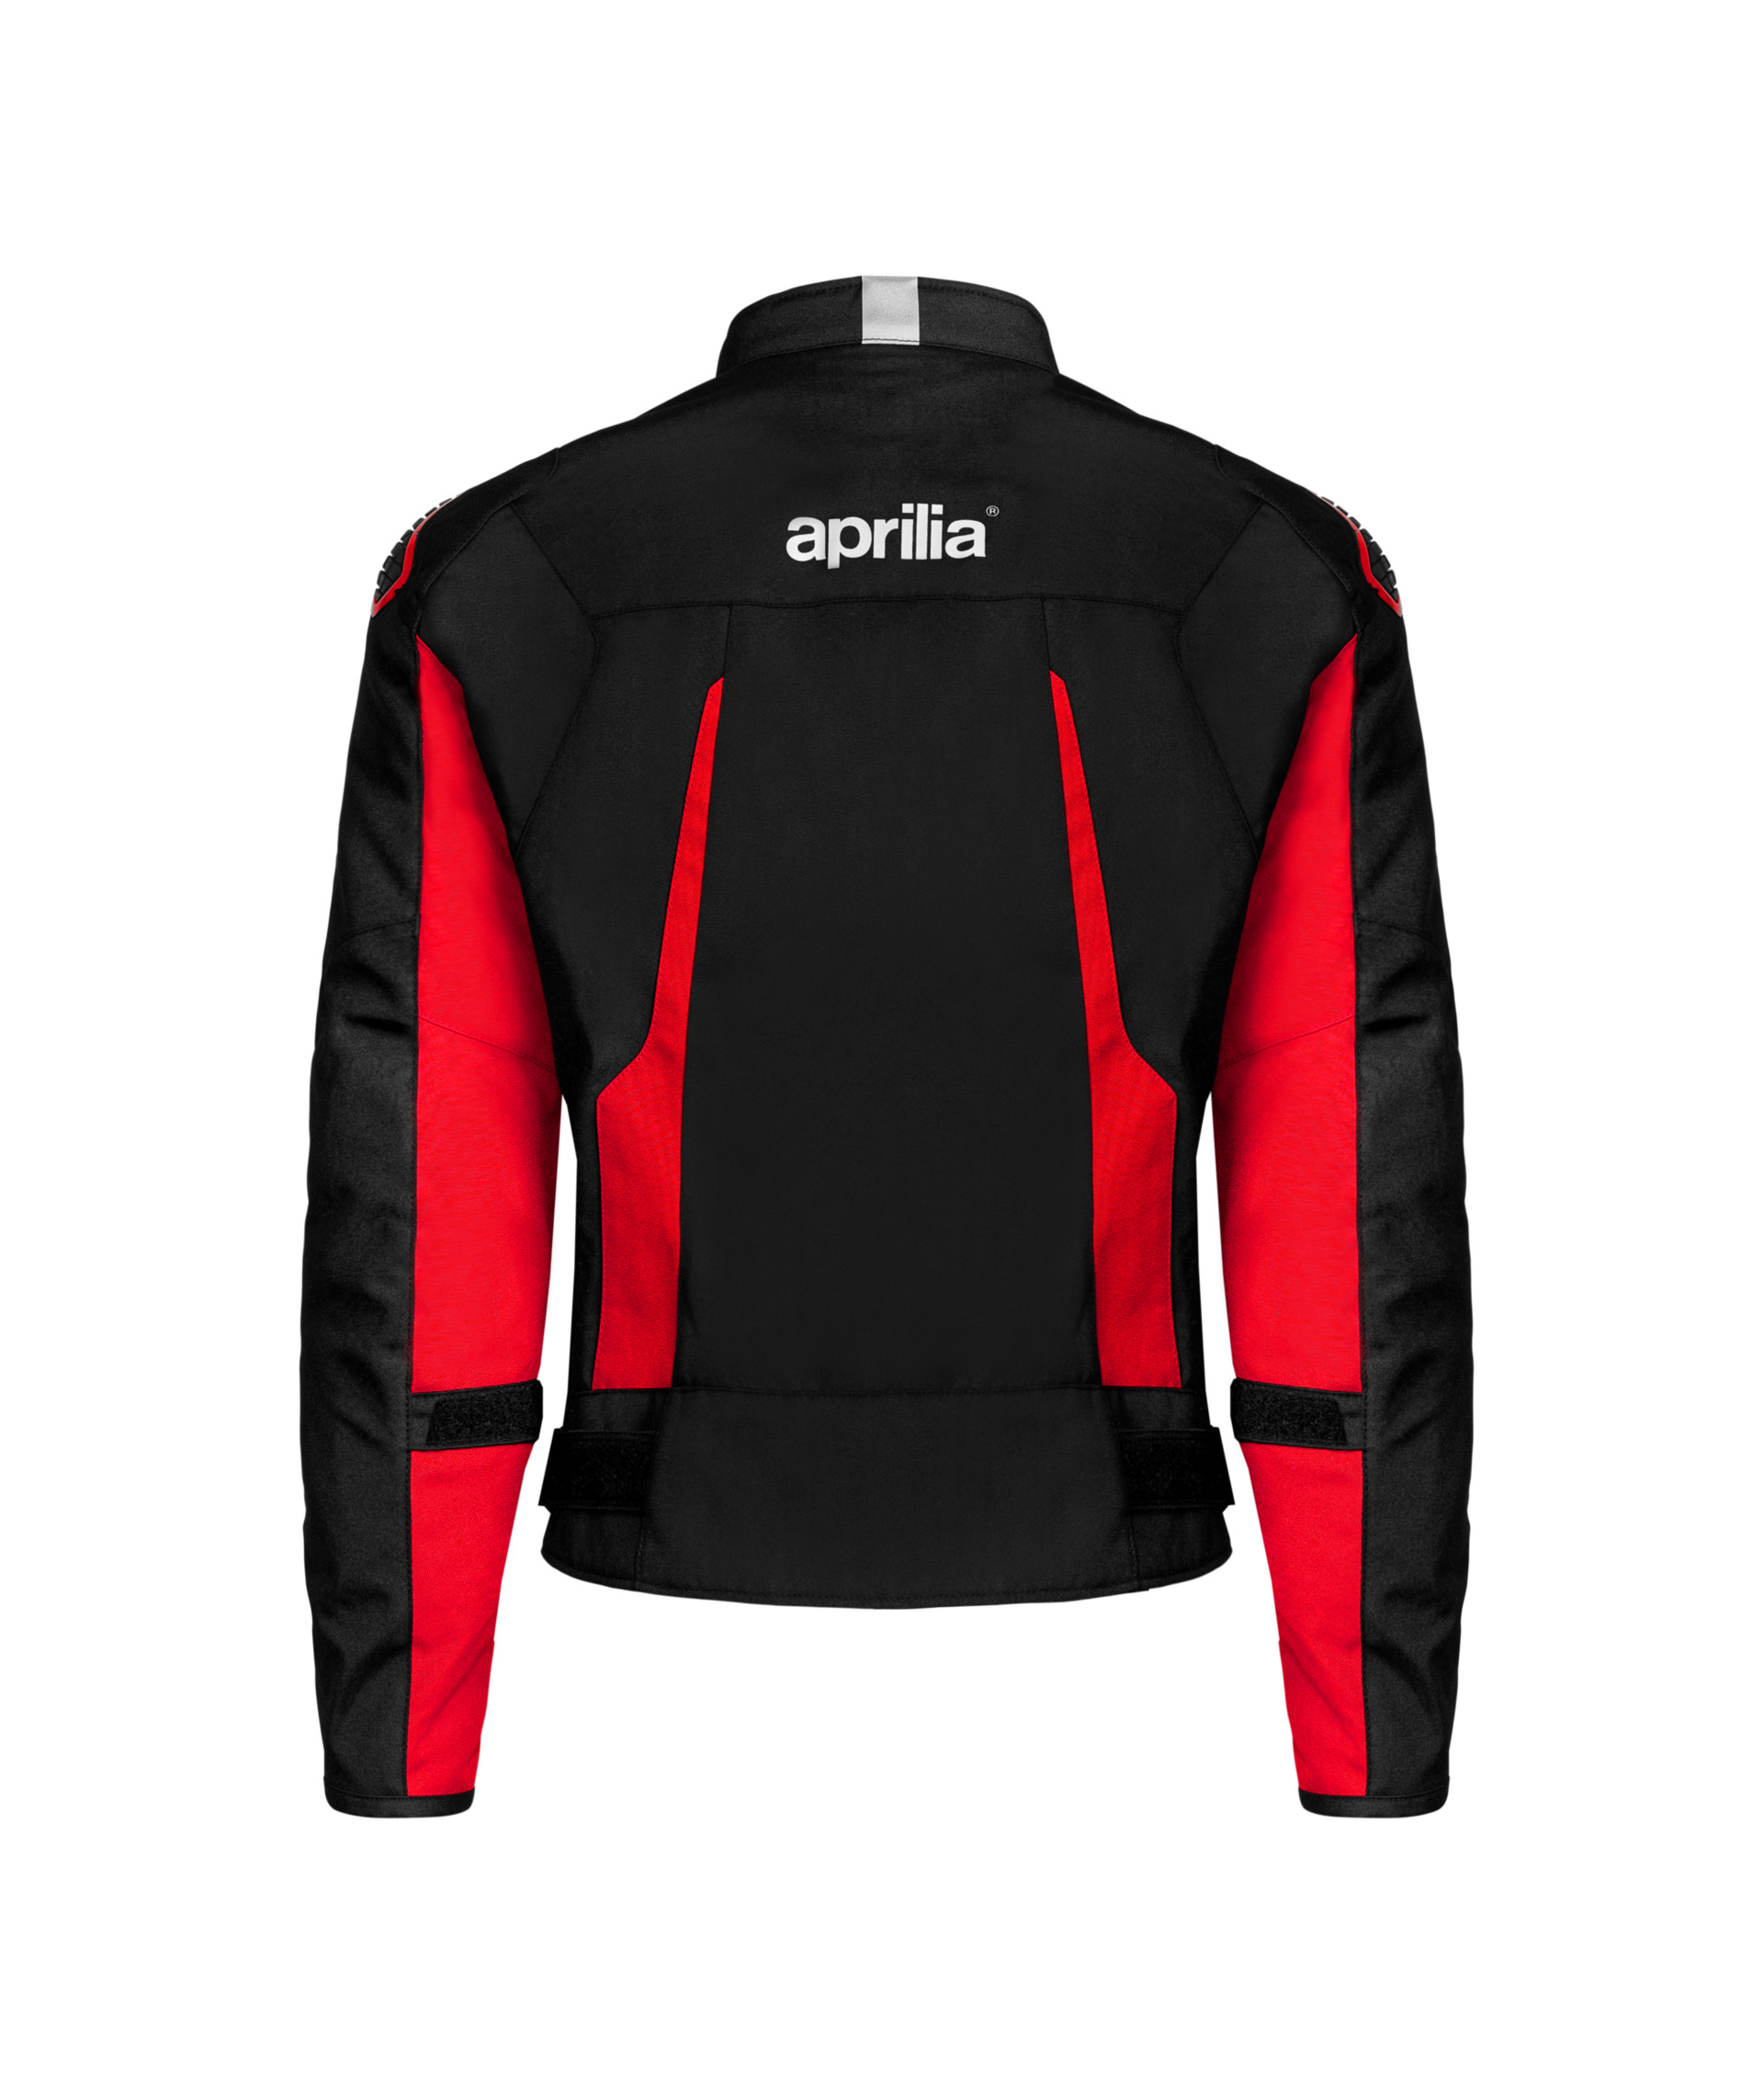 Racing jacket Aprilia | Jackets | Rider Apparel | Full Catalogue | Aprilia  Official Store: Motorcycle Clothing